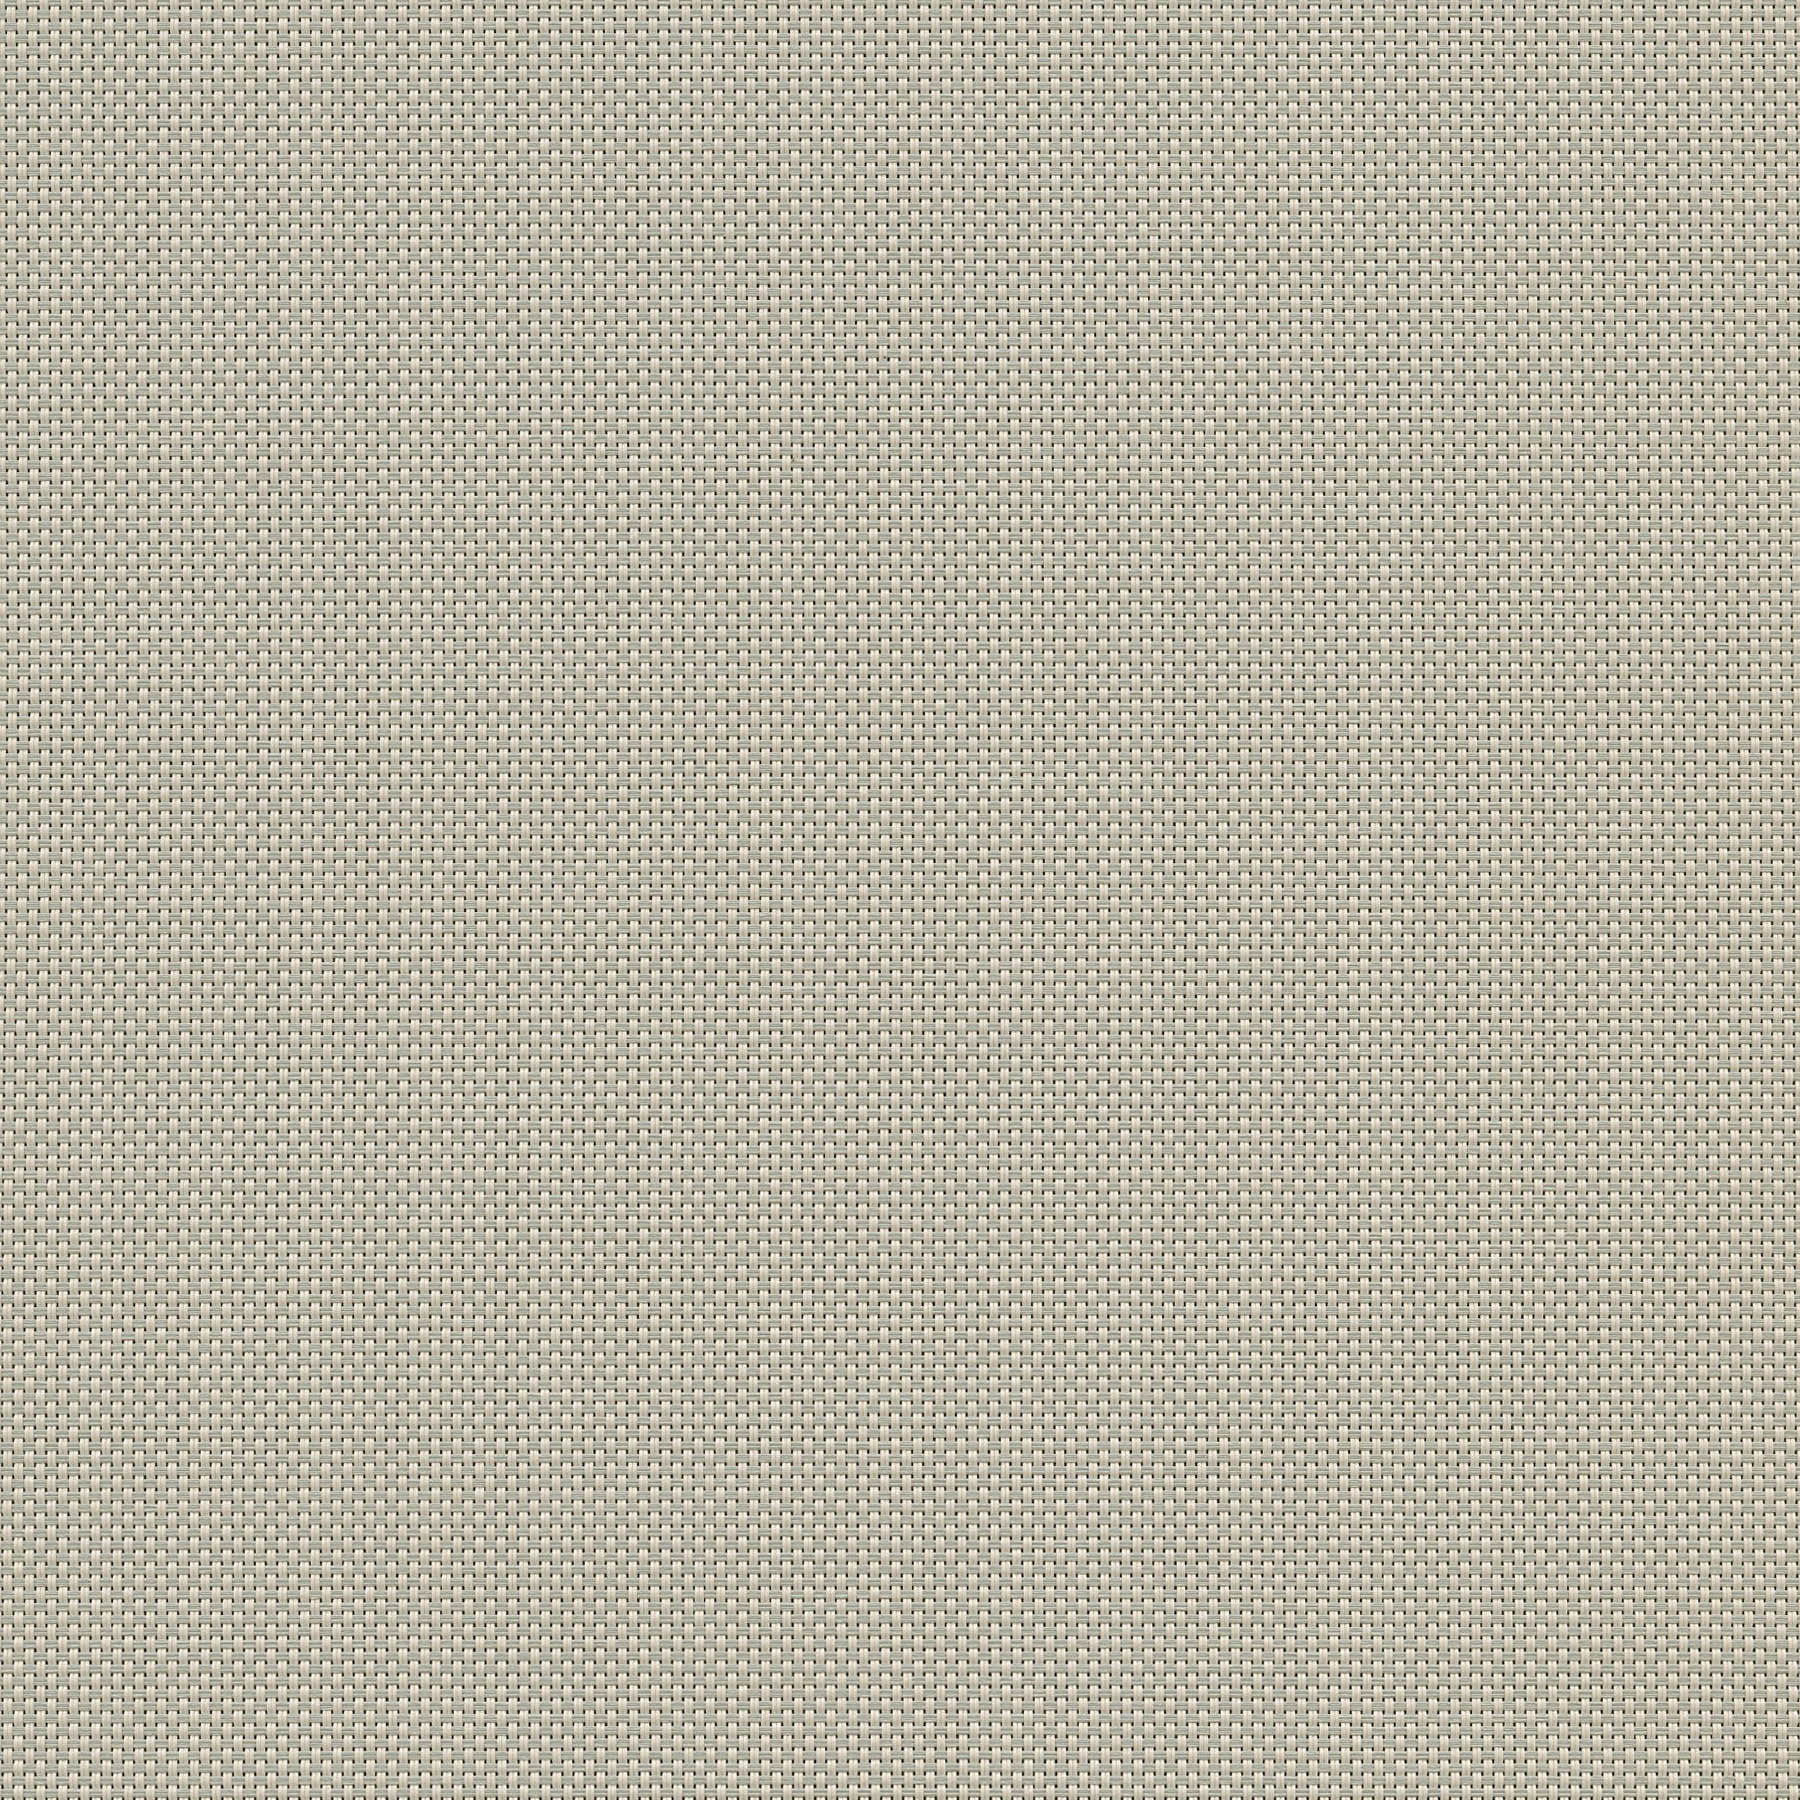 Altex - Fabric - SHEERWEAVE 2390 - Beige-Pearl Grey - 39Q21